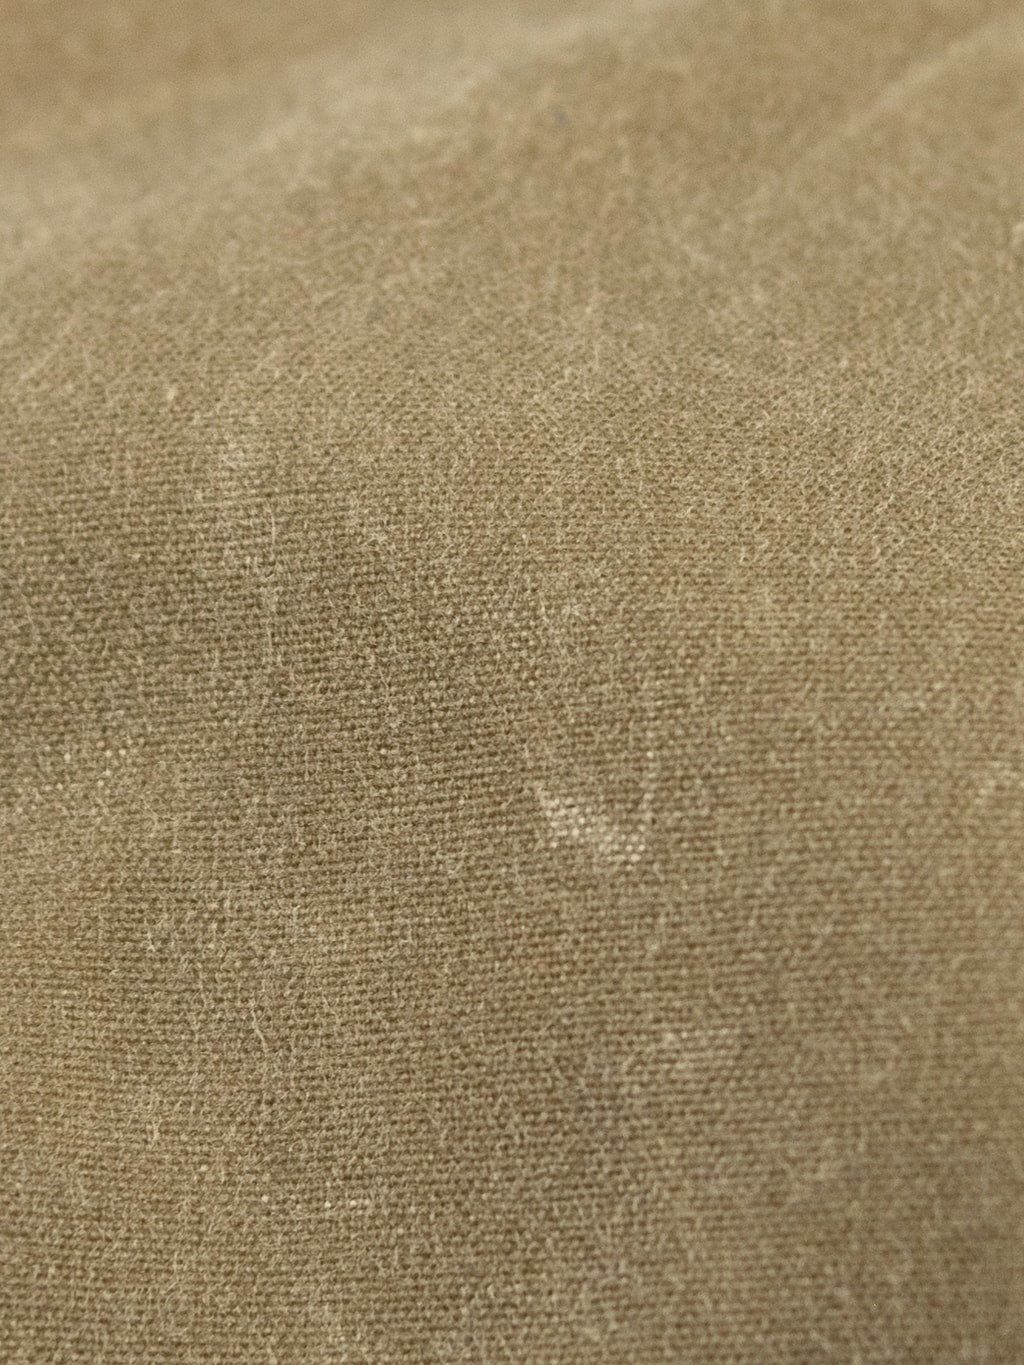 Freenote Cloth Riders Jacket Waxed Canvas Tobacco texture closeup